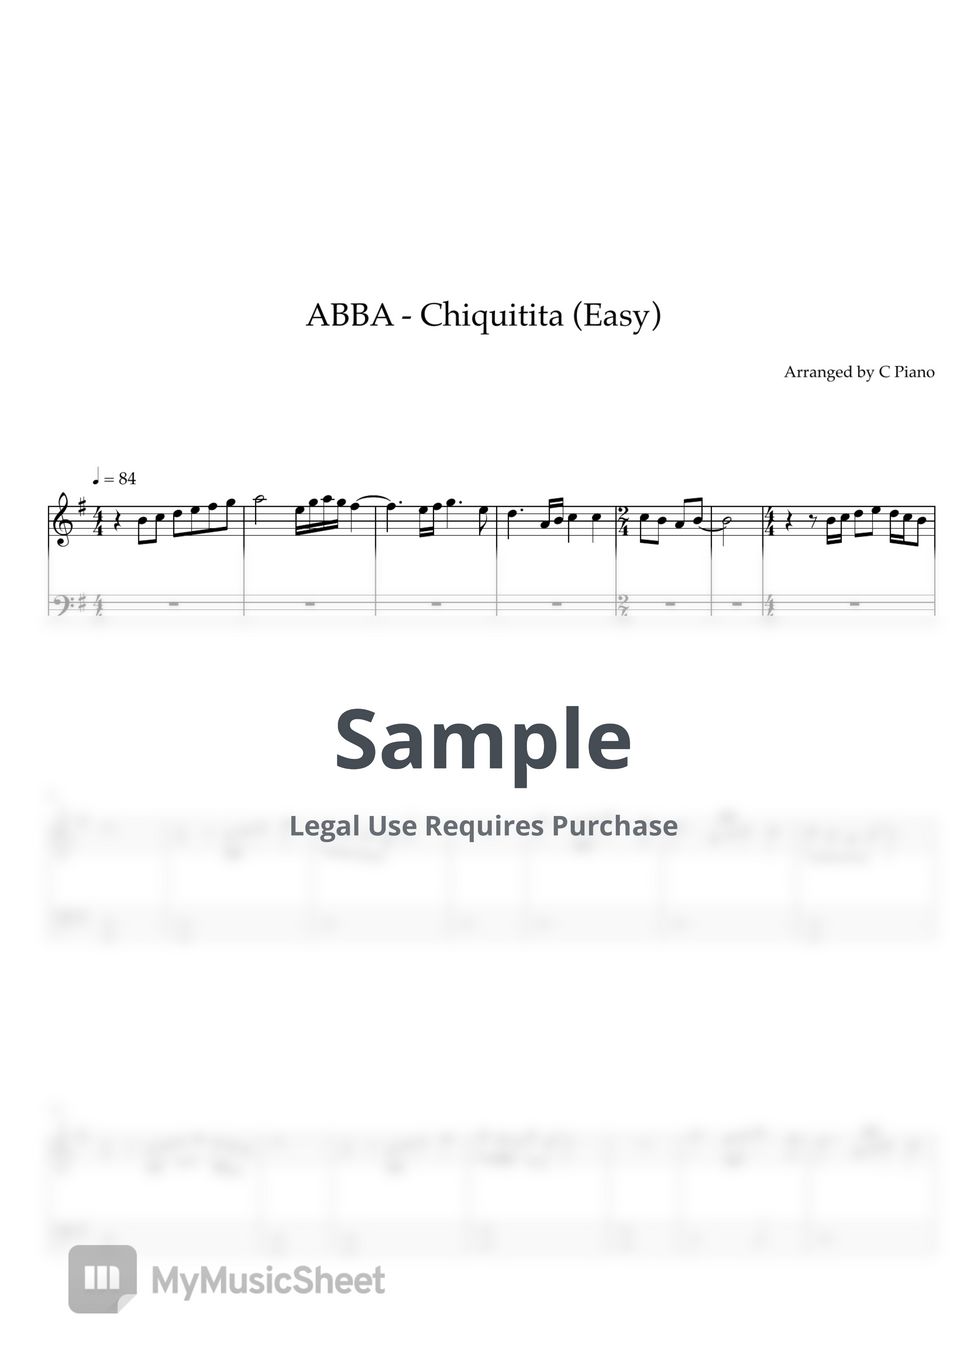 ABBA - Chiquitita (Easy Version) by C Piano